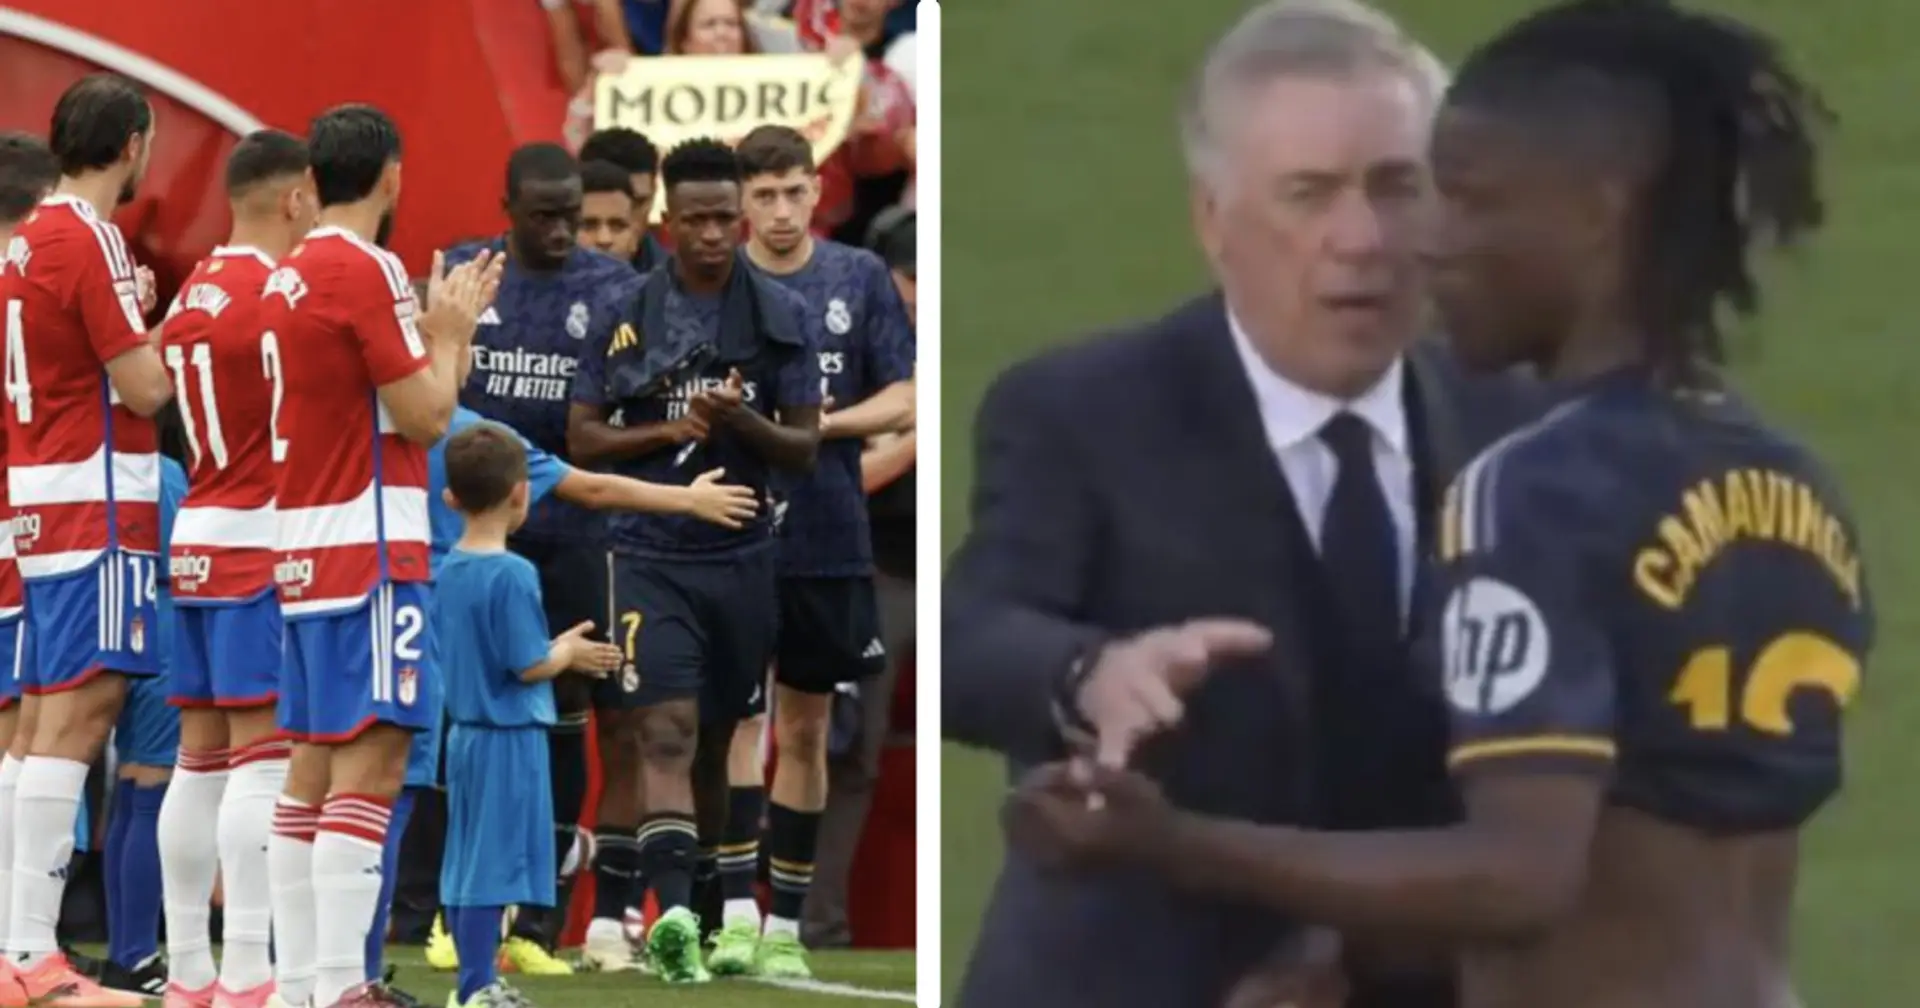 One beautiful gesture Carlo Ancelotti made after Granada win